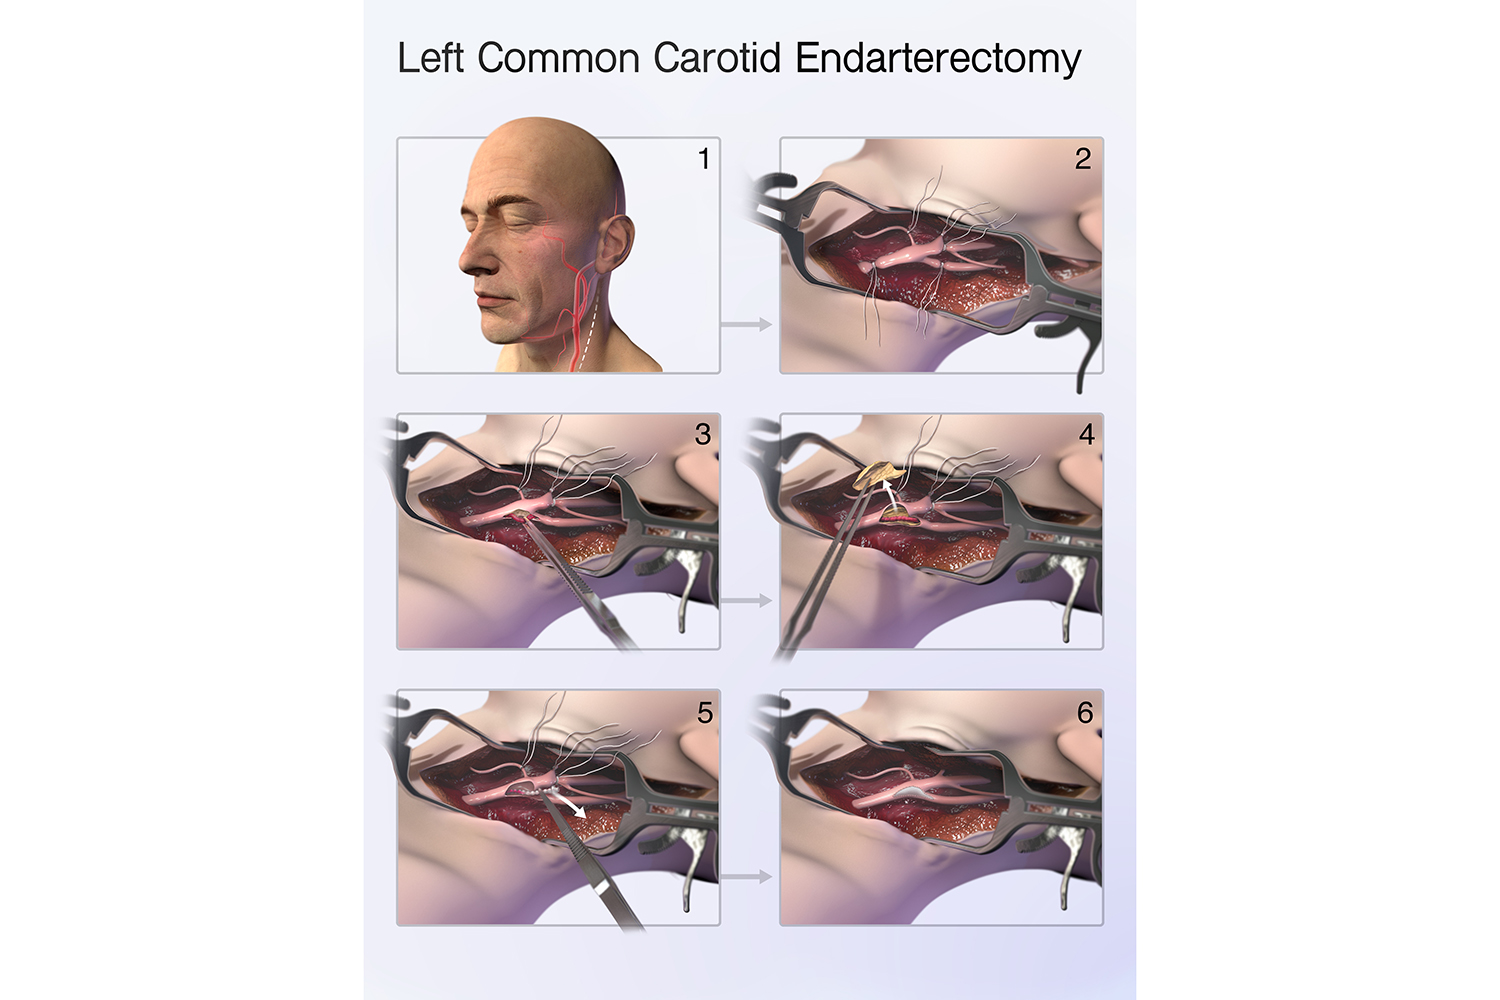 Illustration of a carotid endarterectomy